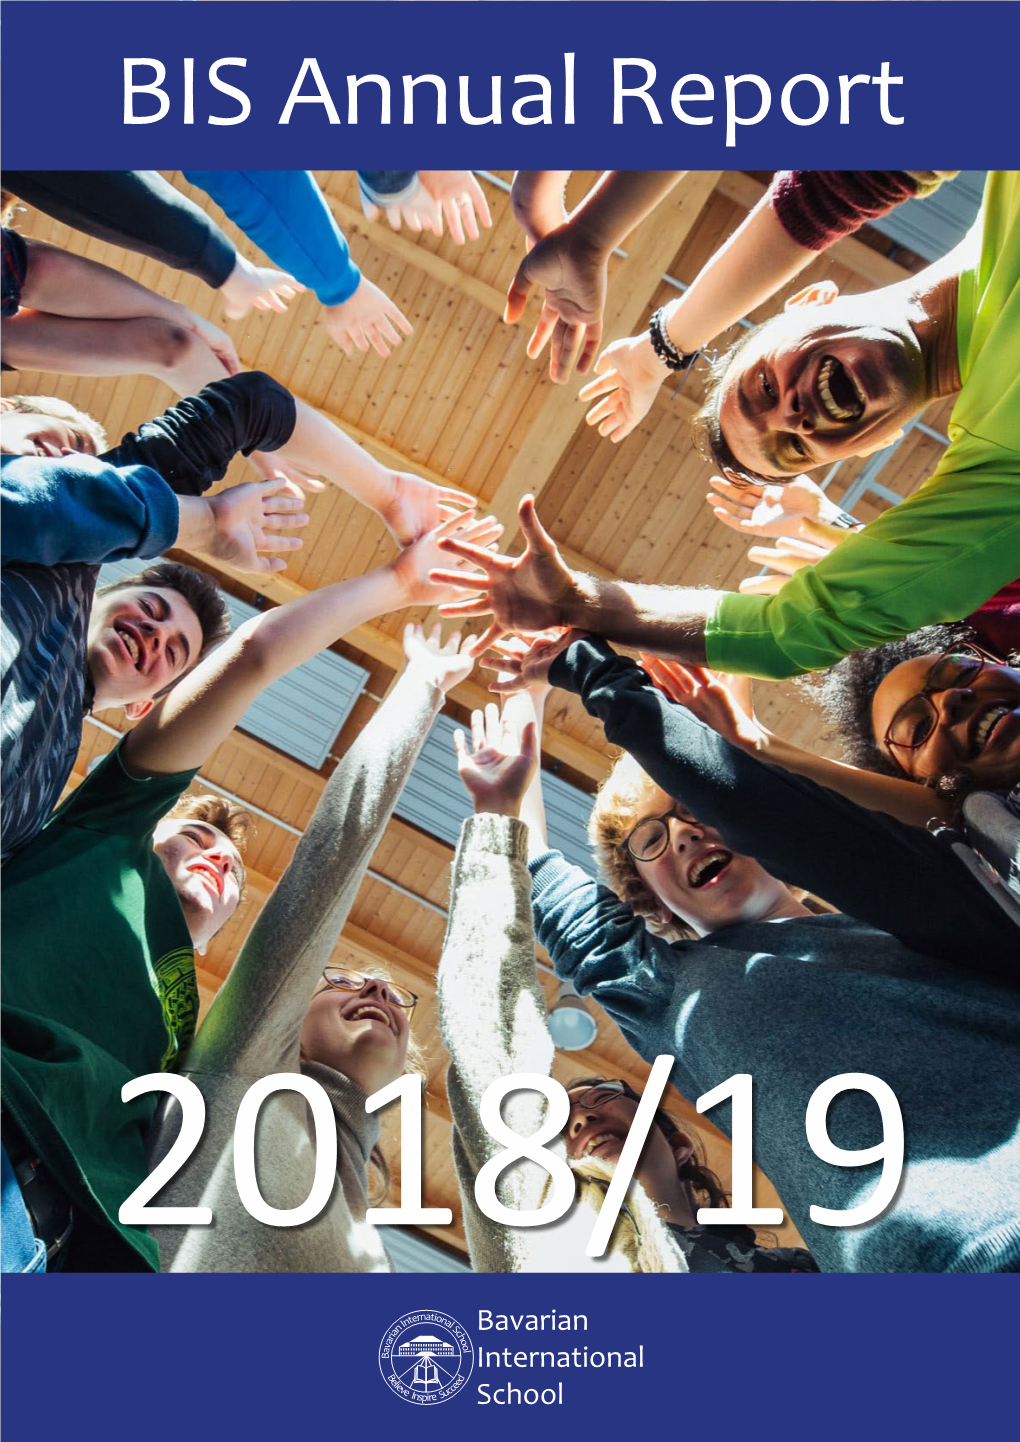 BIS Annual Reportannual 2018 – 2019 Report